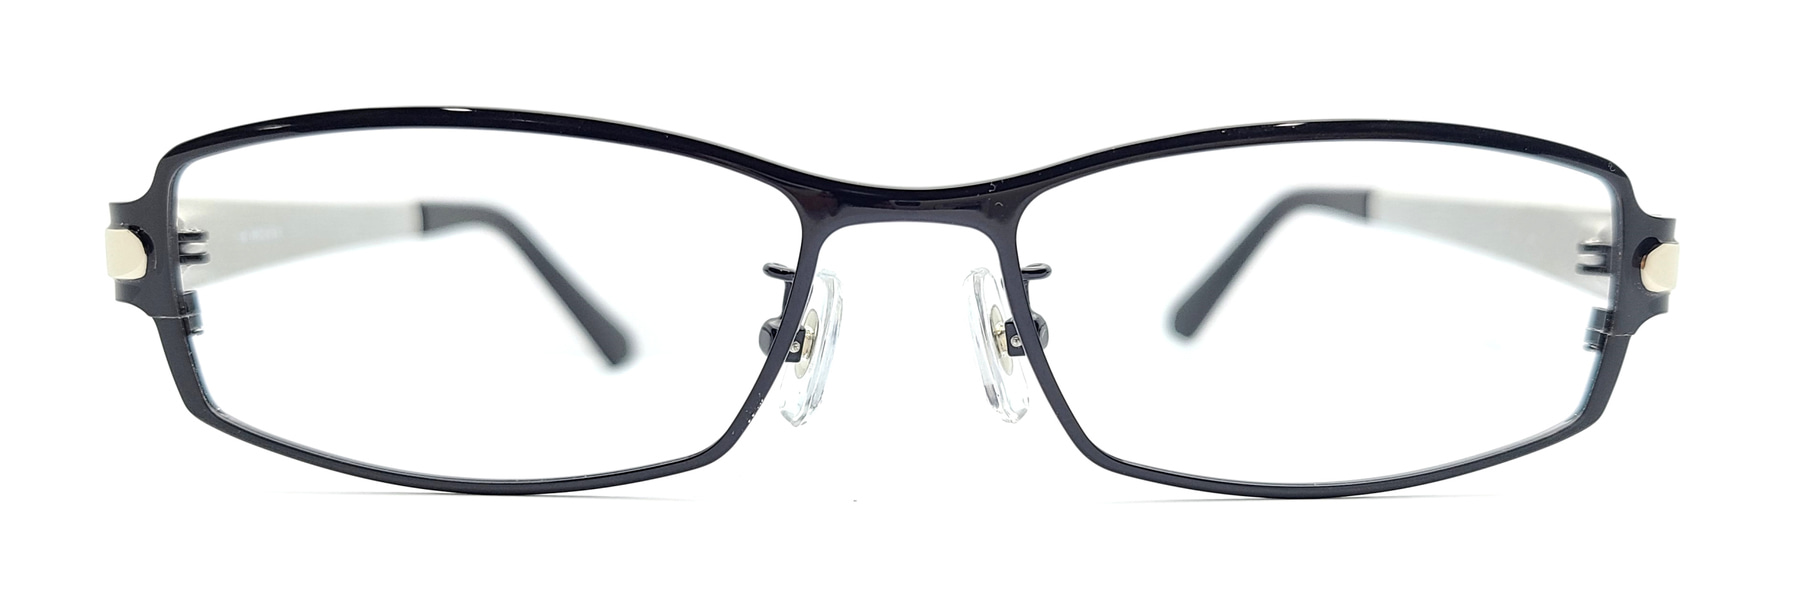 MINIHOUSE M-1014, Korean glasses, sunglasses, eyeglasses, glasses